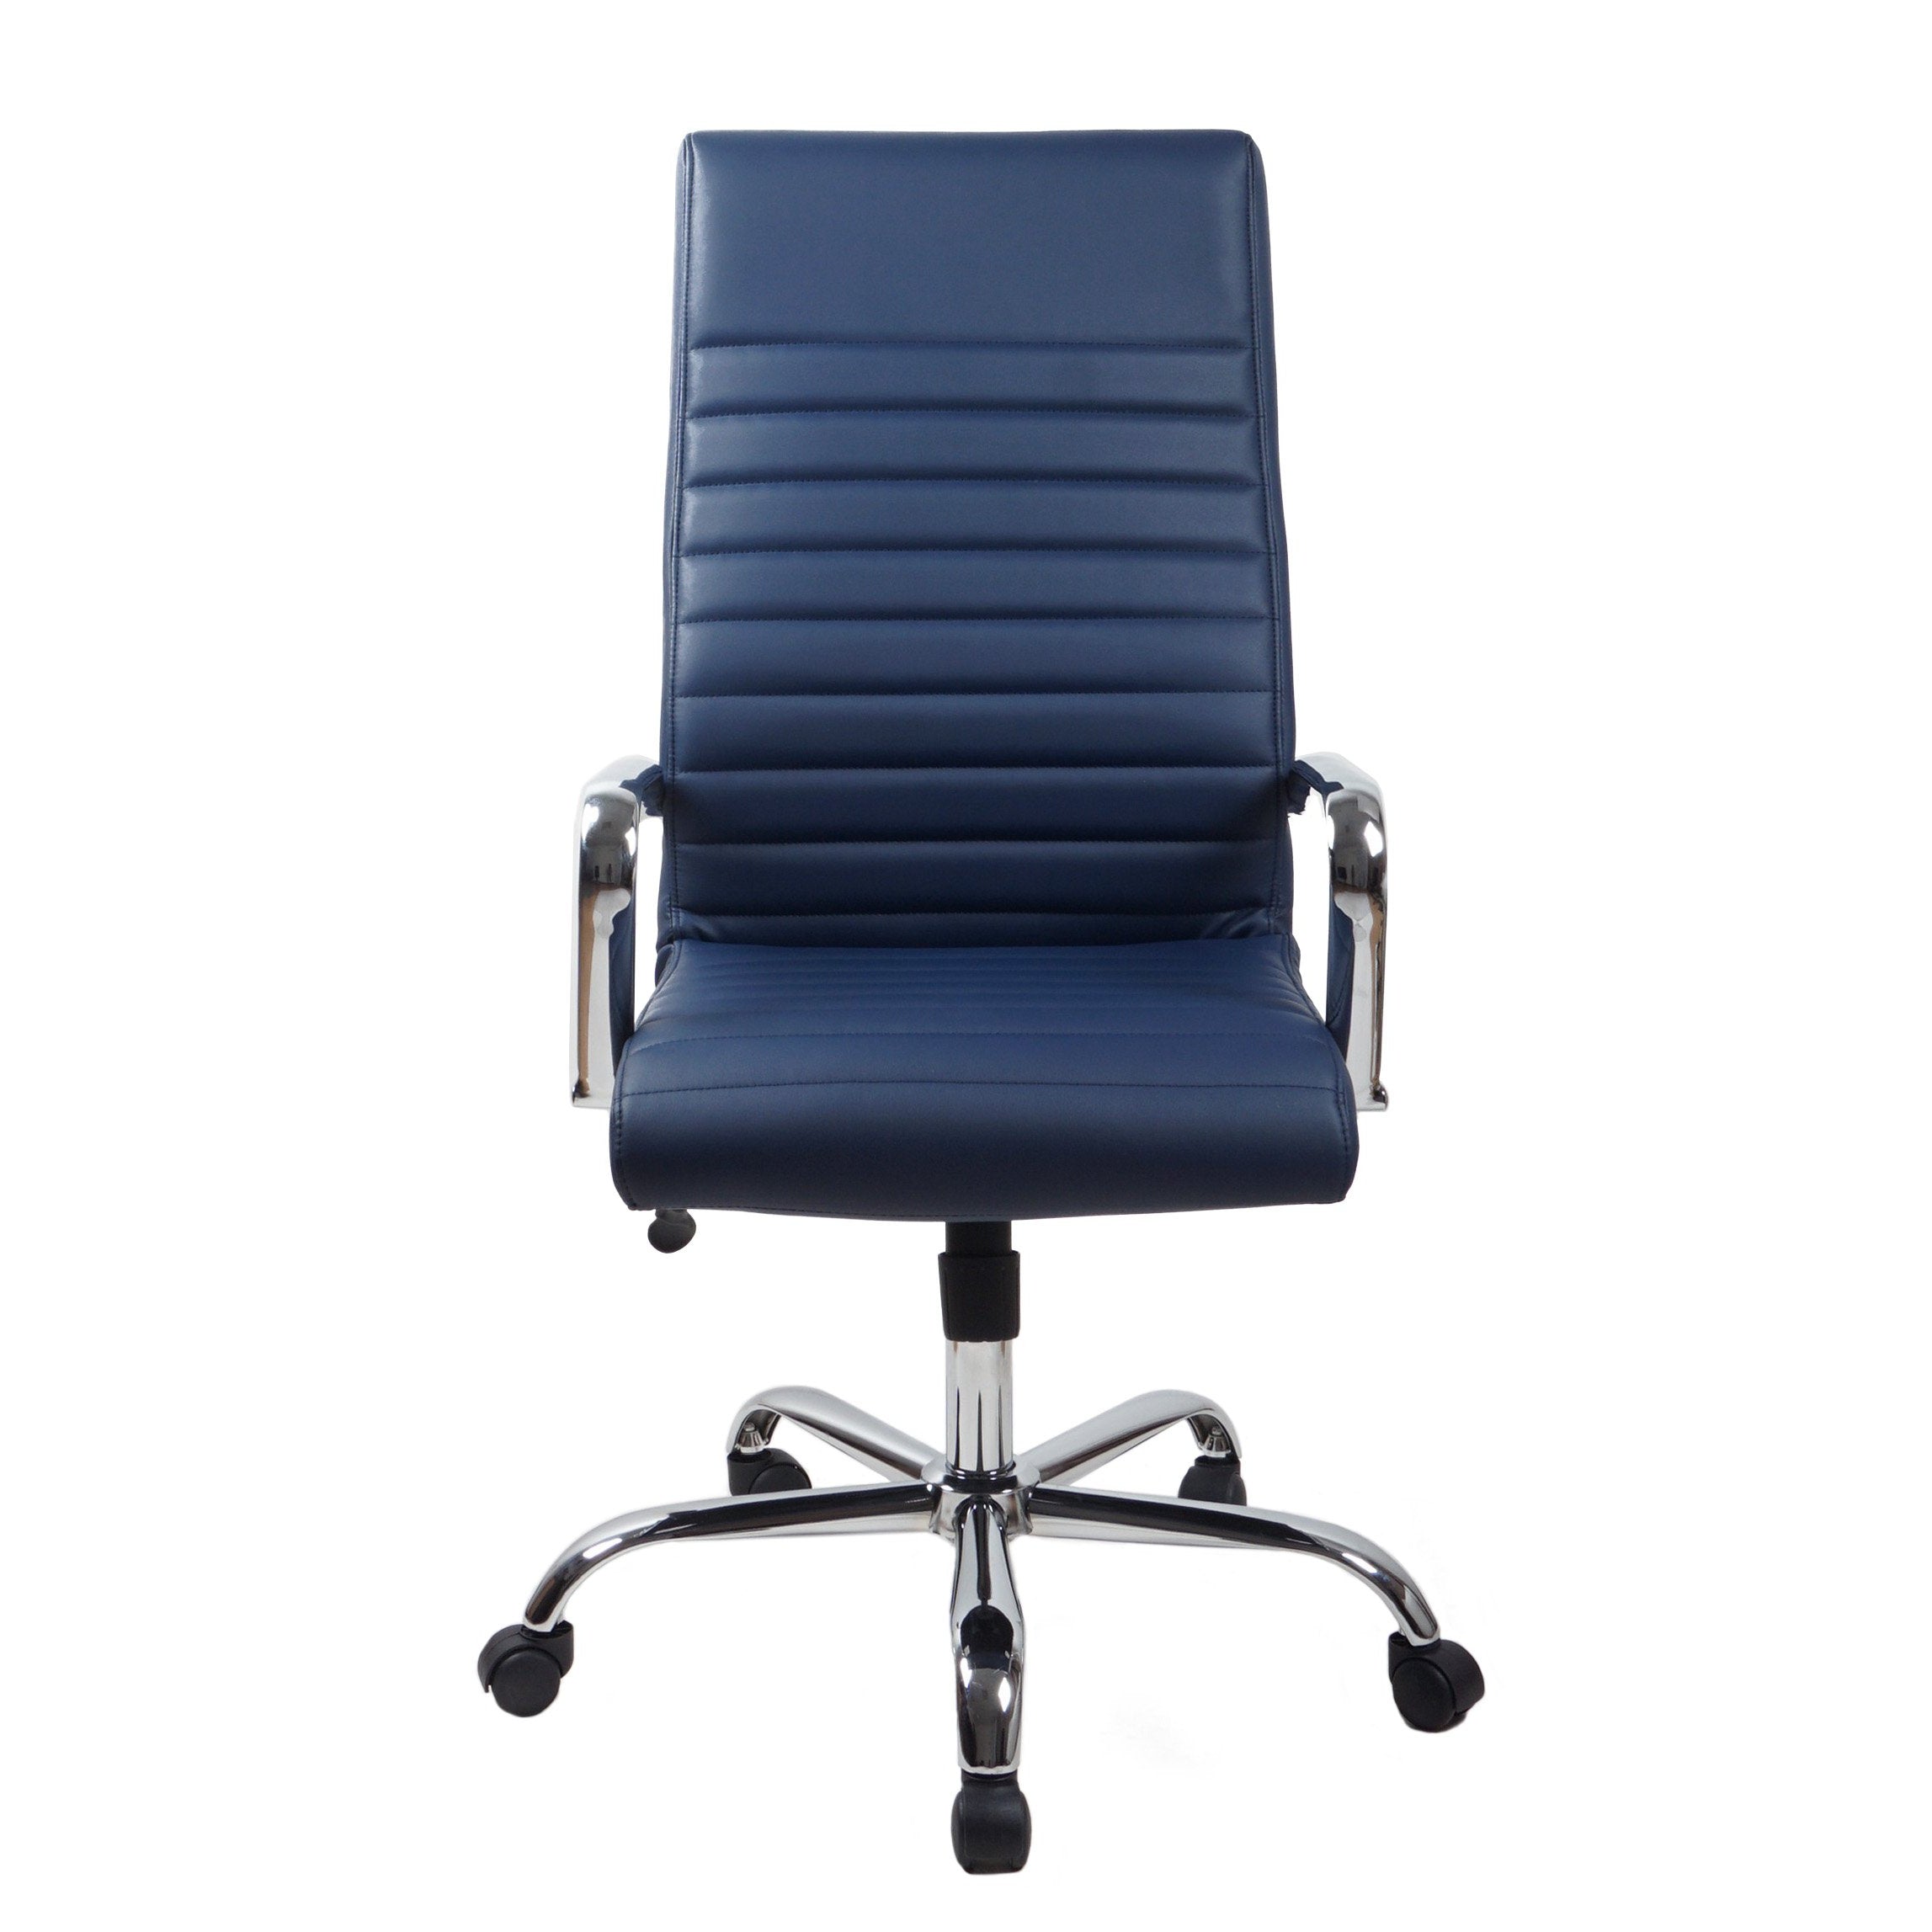 RealBiz II Modern Comfort Series High-Back LeatherPro Chair, Midnight Blue